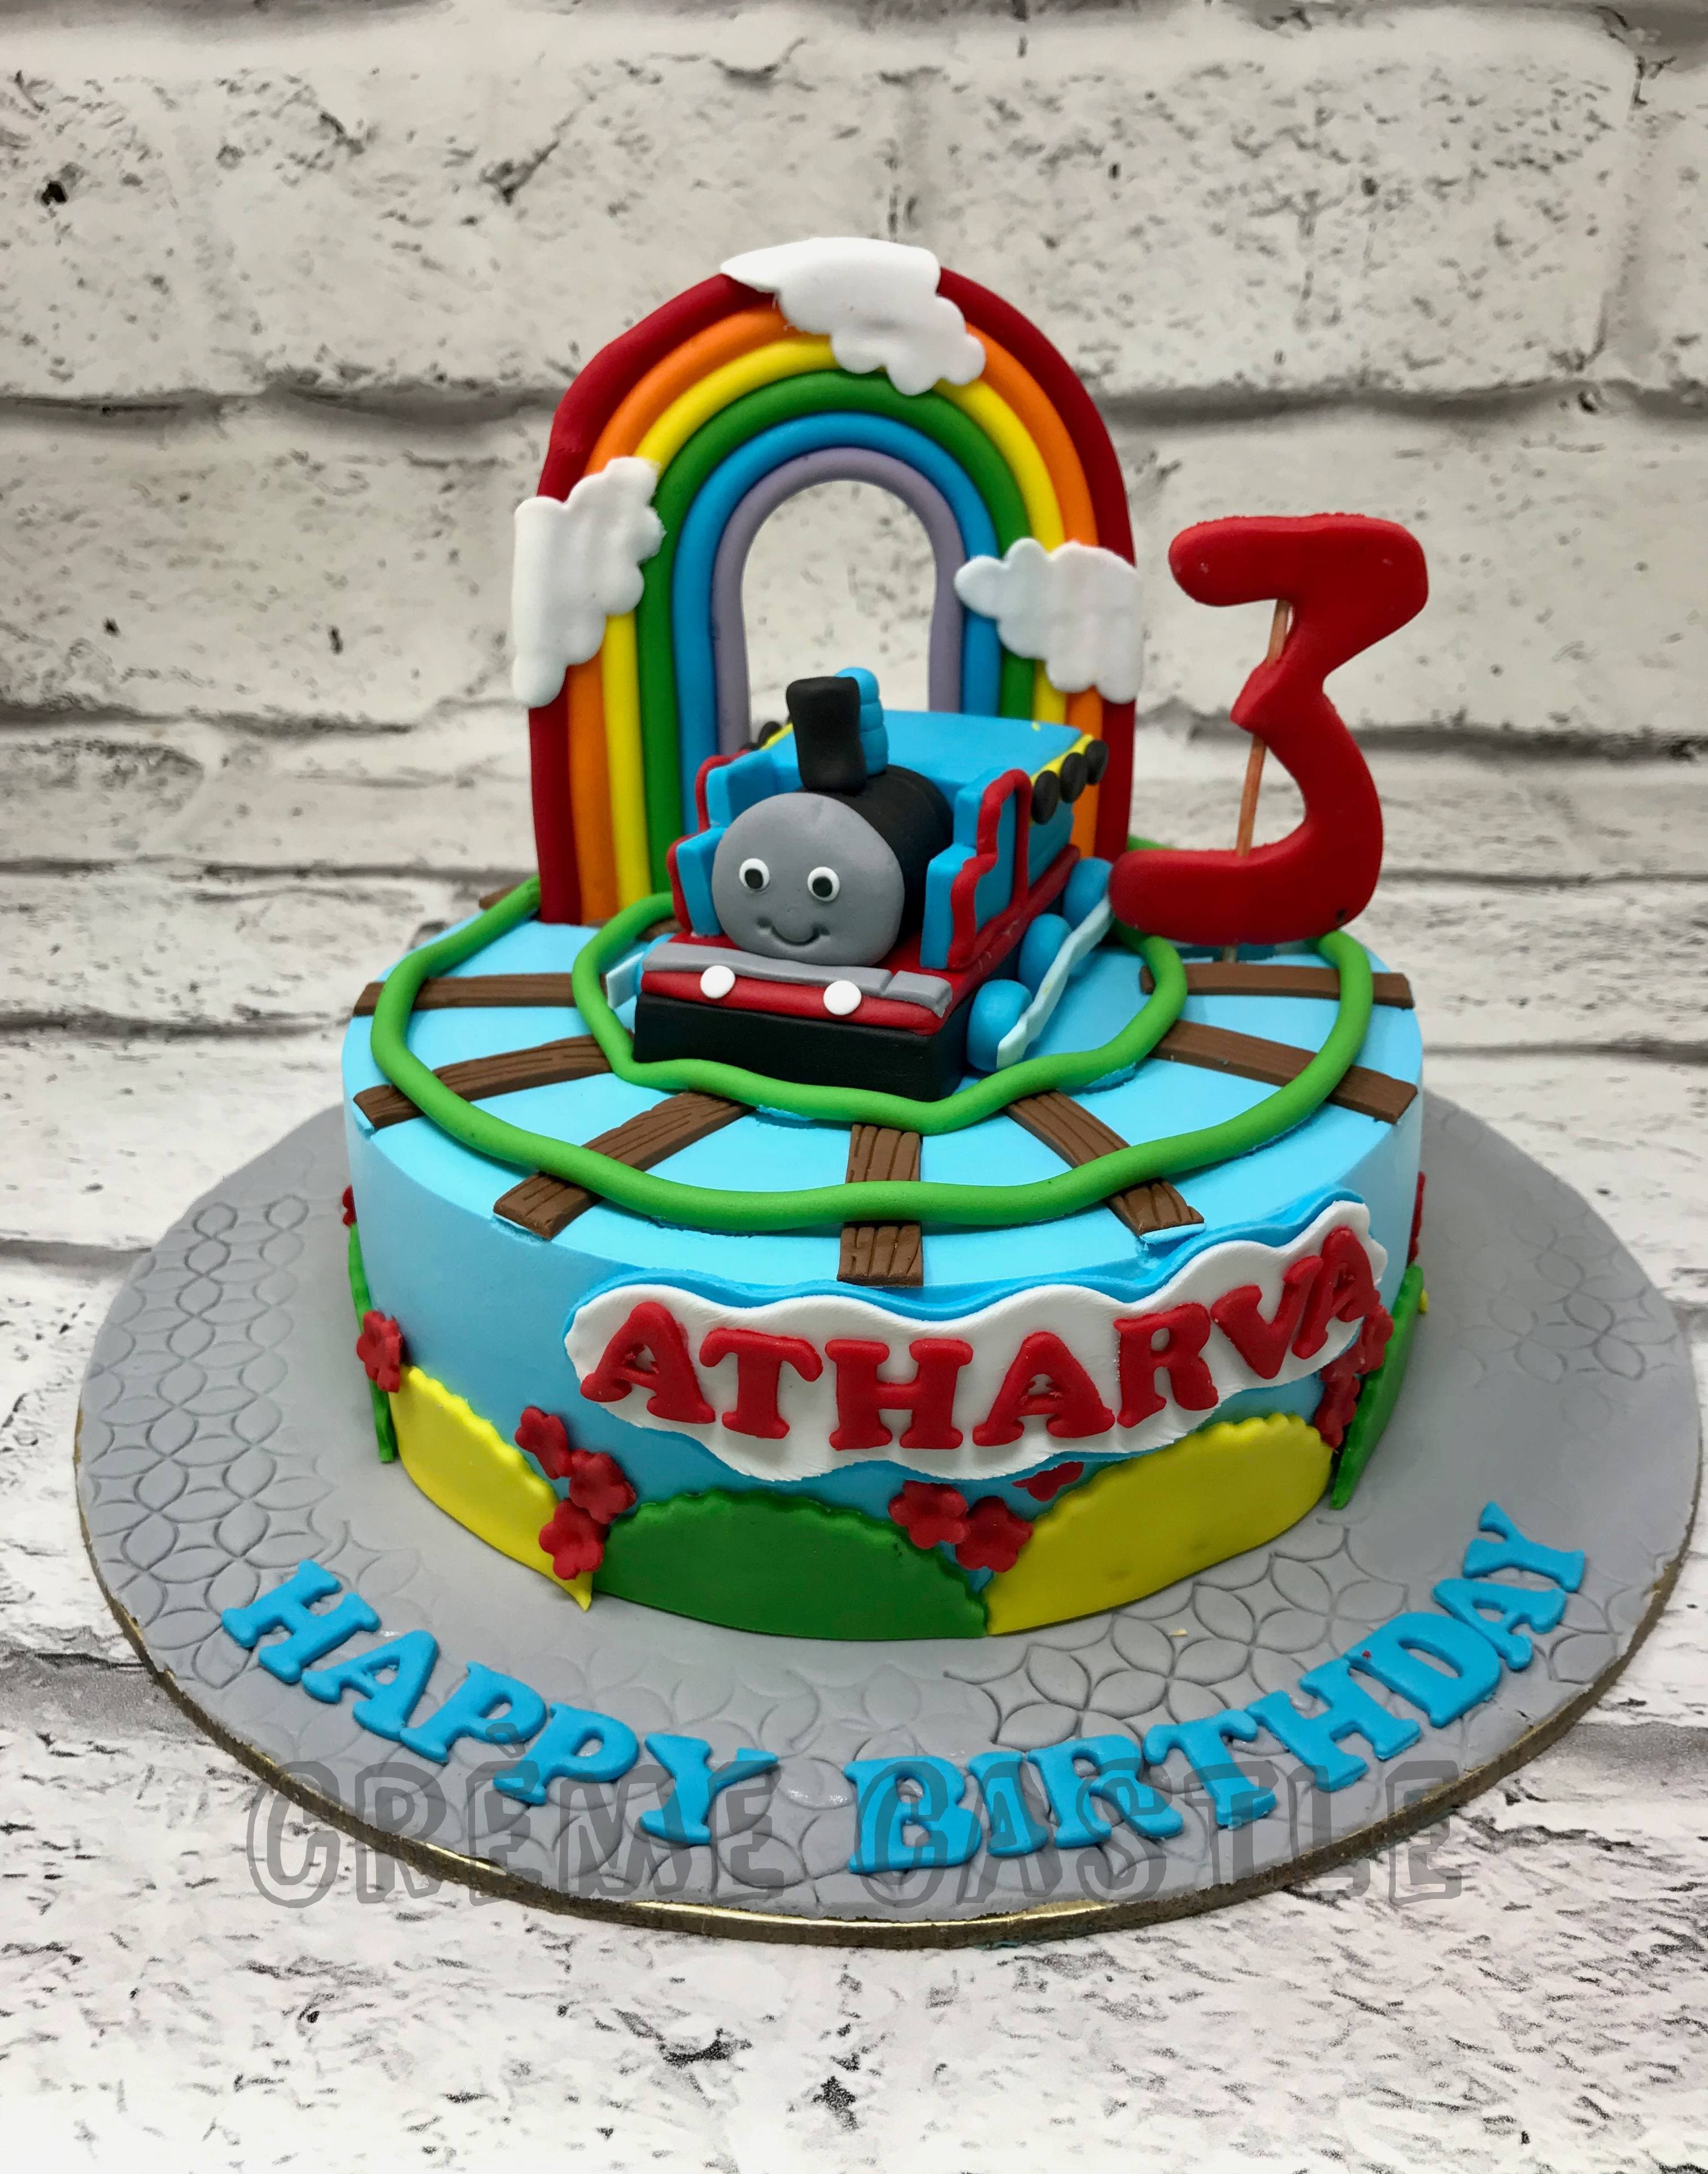 Share more than 70 happy birthday atharva cake - awesomeenglish.edu.vn